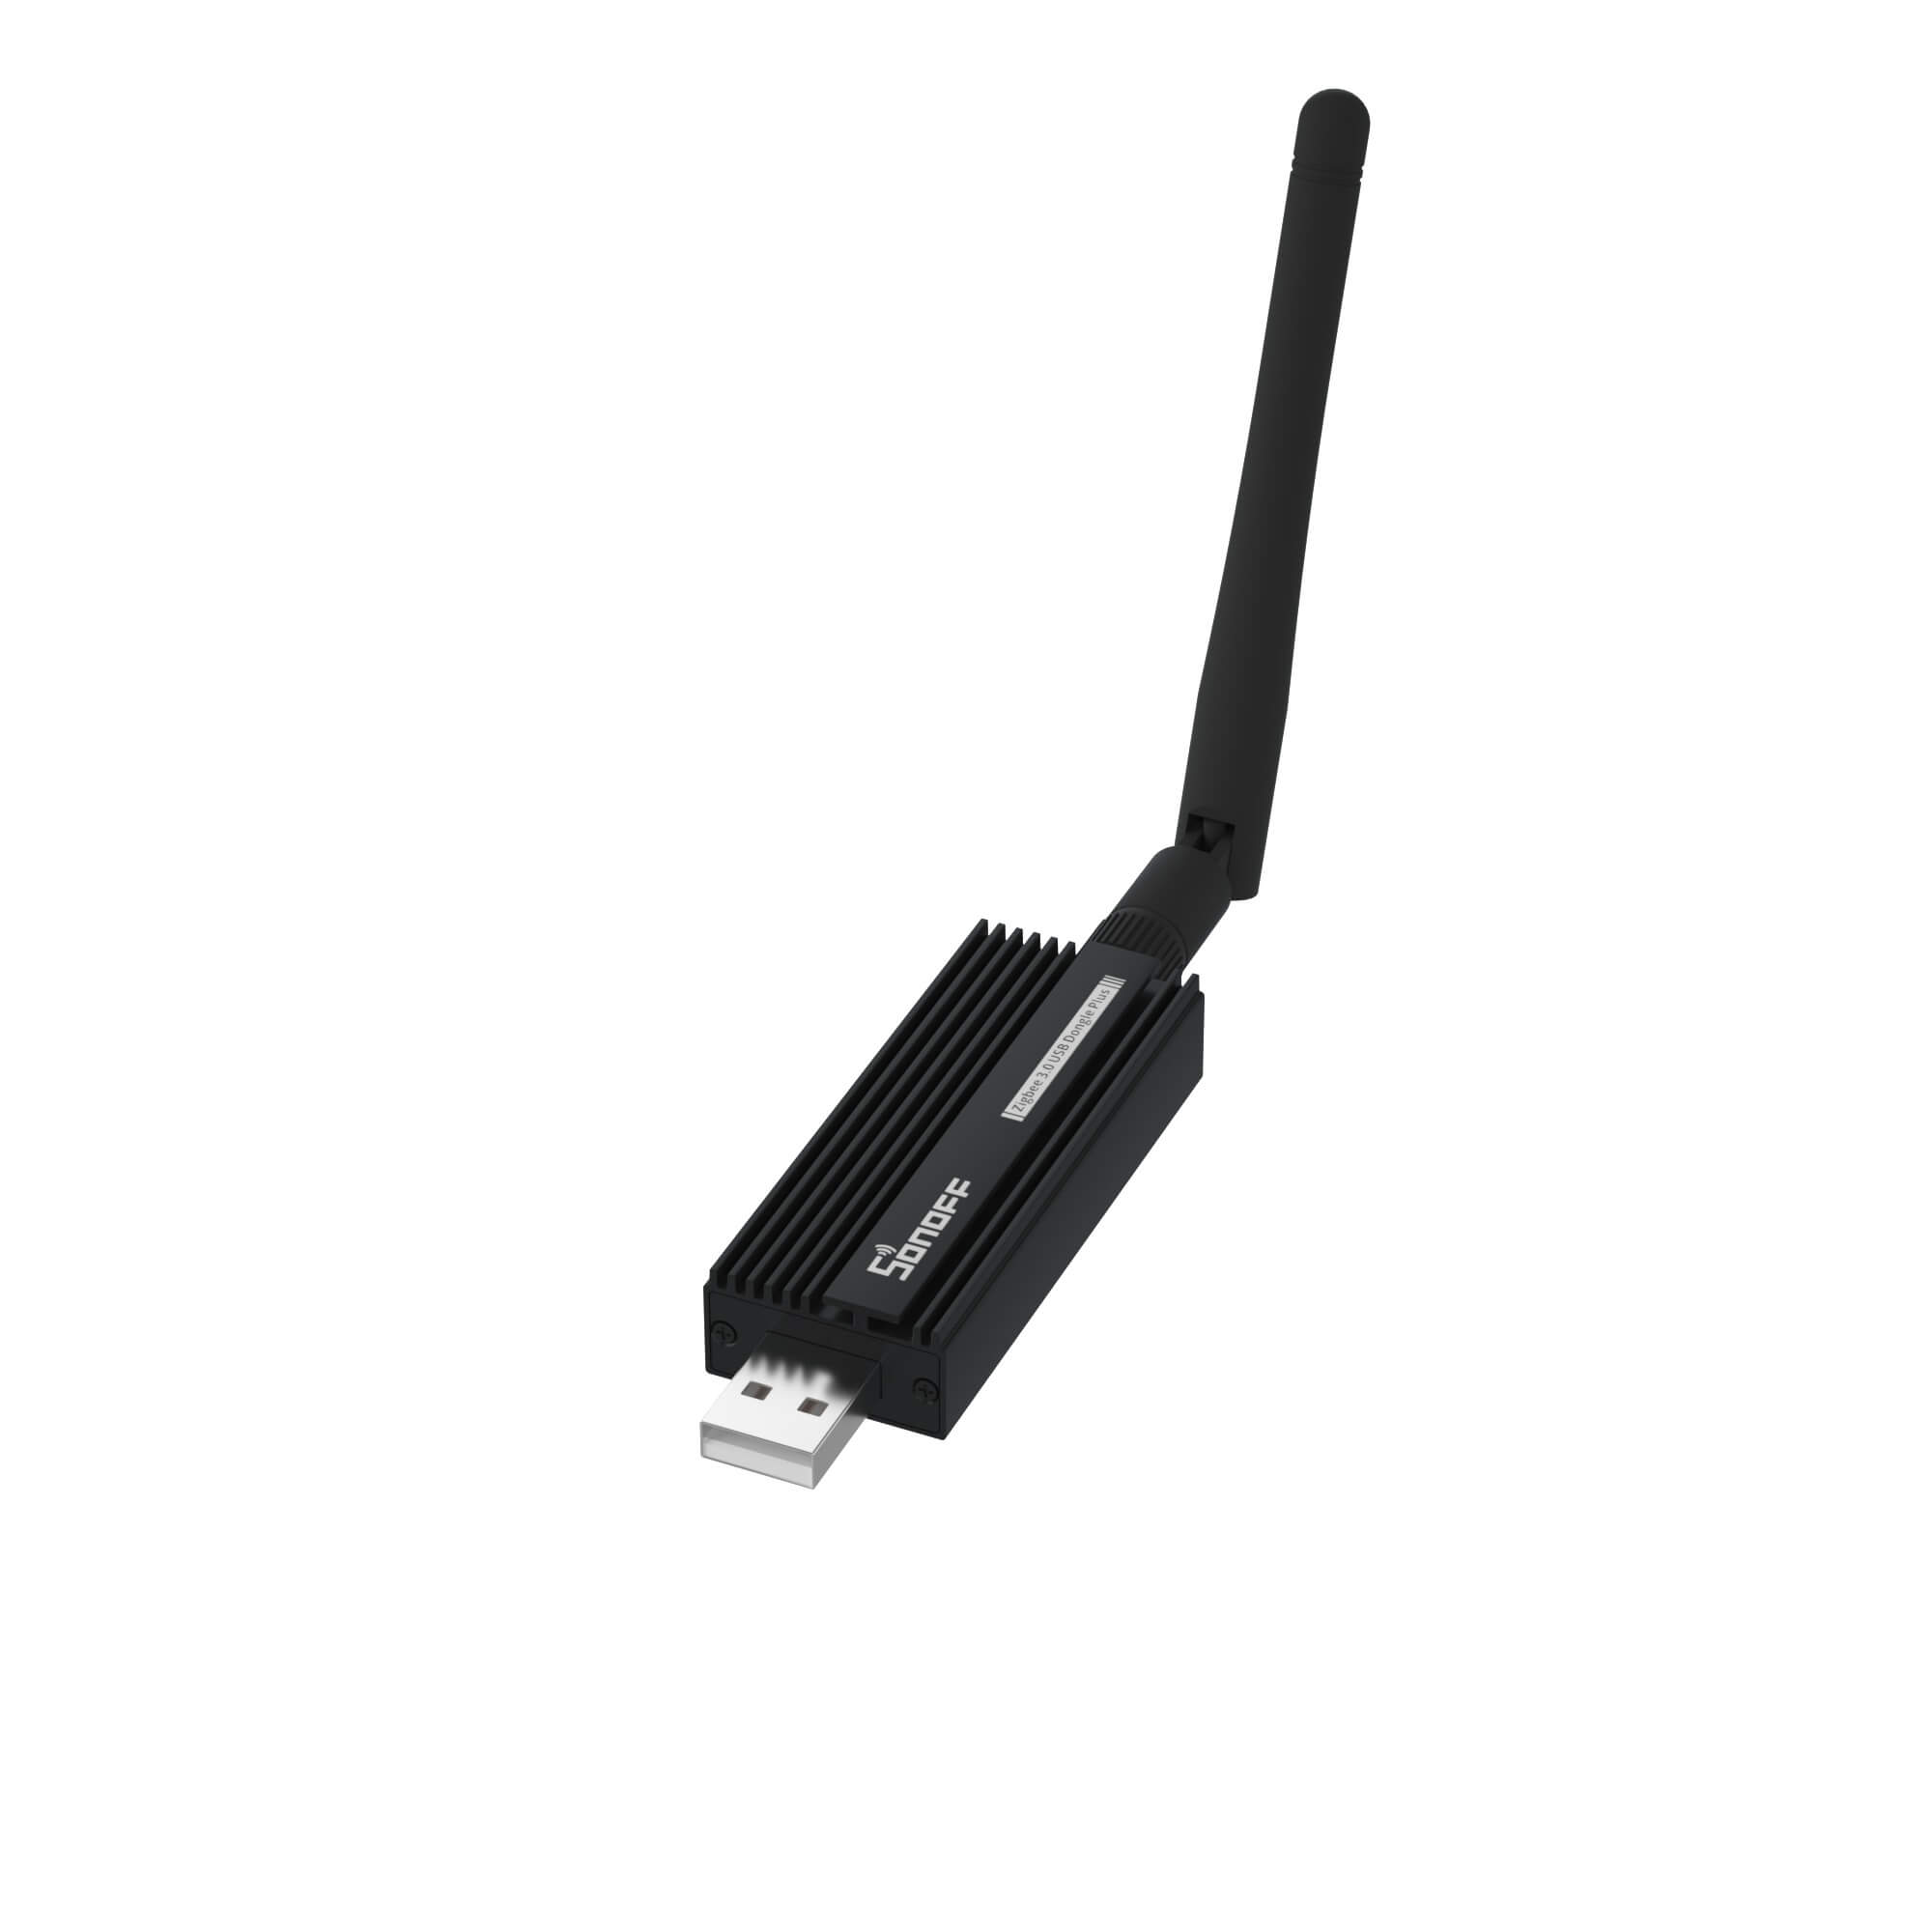 SONOFF Zigbee 3.0 USB Dongle Plus Gateway, Universal Zigbee USB Gateway  with Antenna for Home Assistant, IoBroker, Wireless Zigbee 3.0 USB  Adapter(1